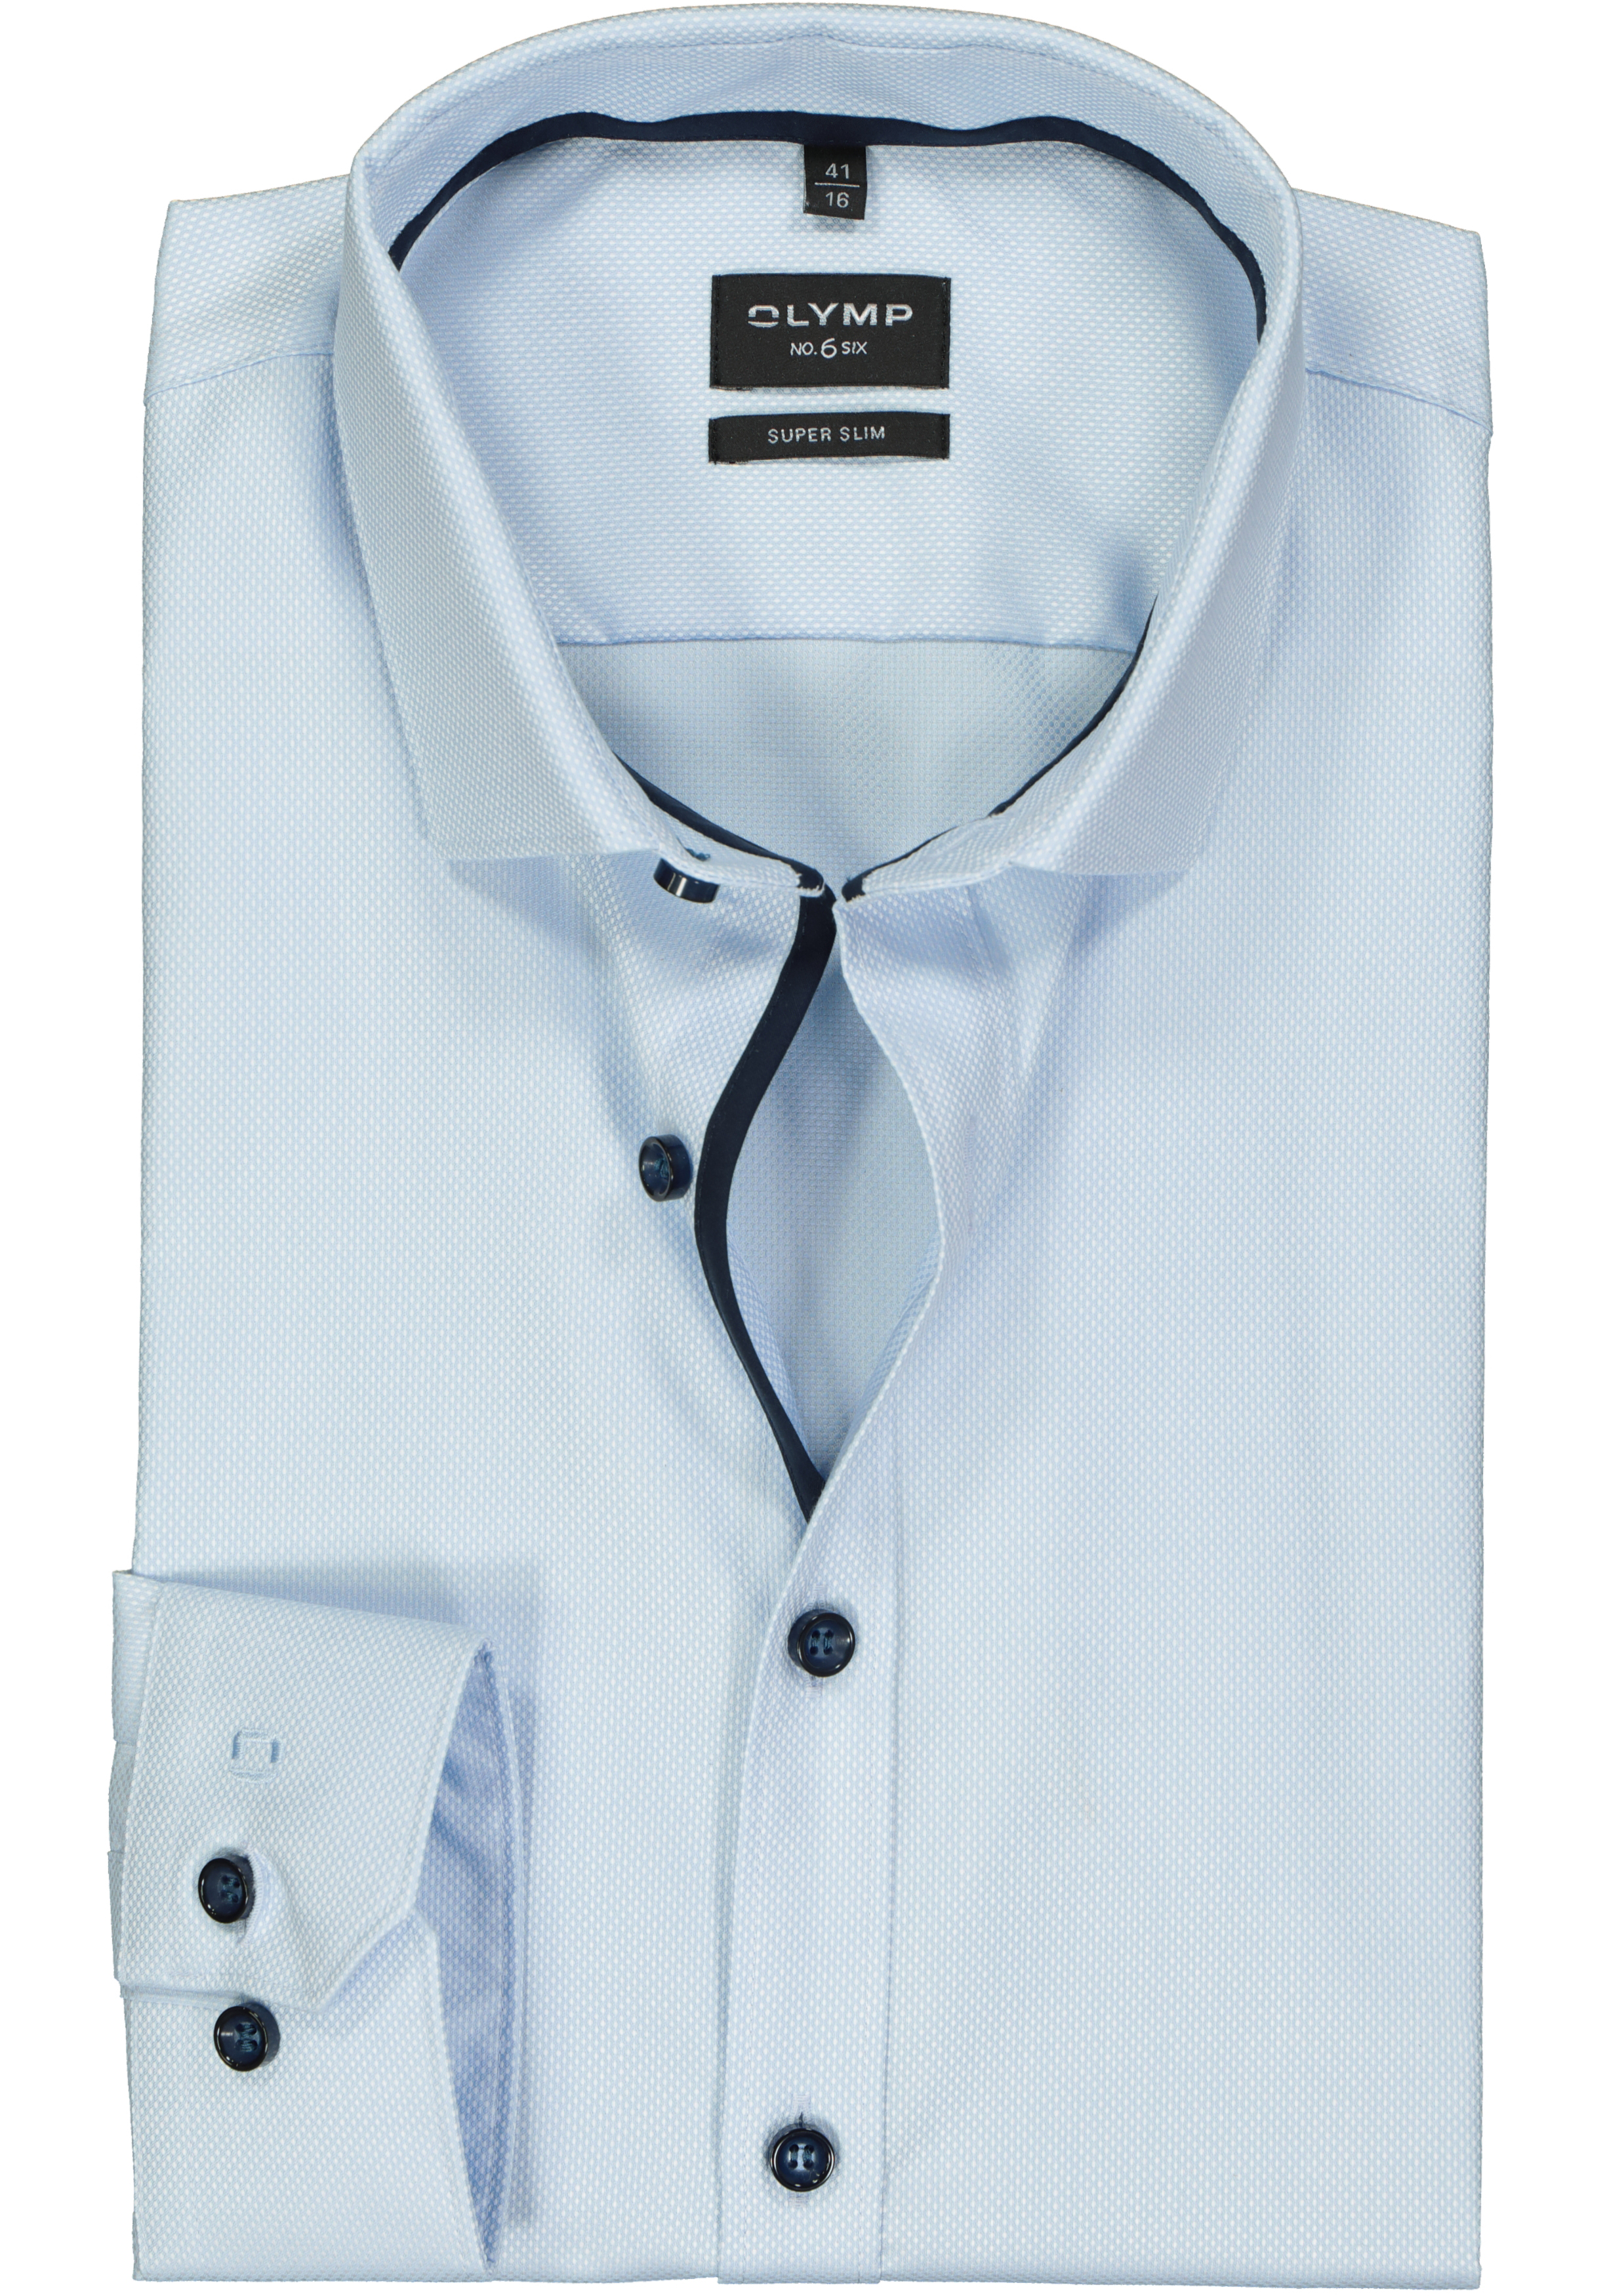 OLYMP No. 6 Six super slim fit overhemd, structuur, lichtblauw (contrast)